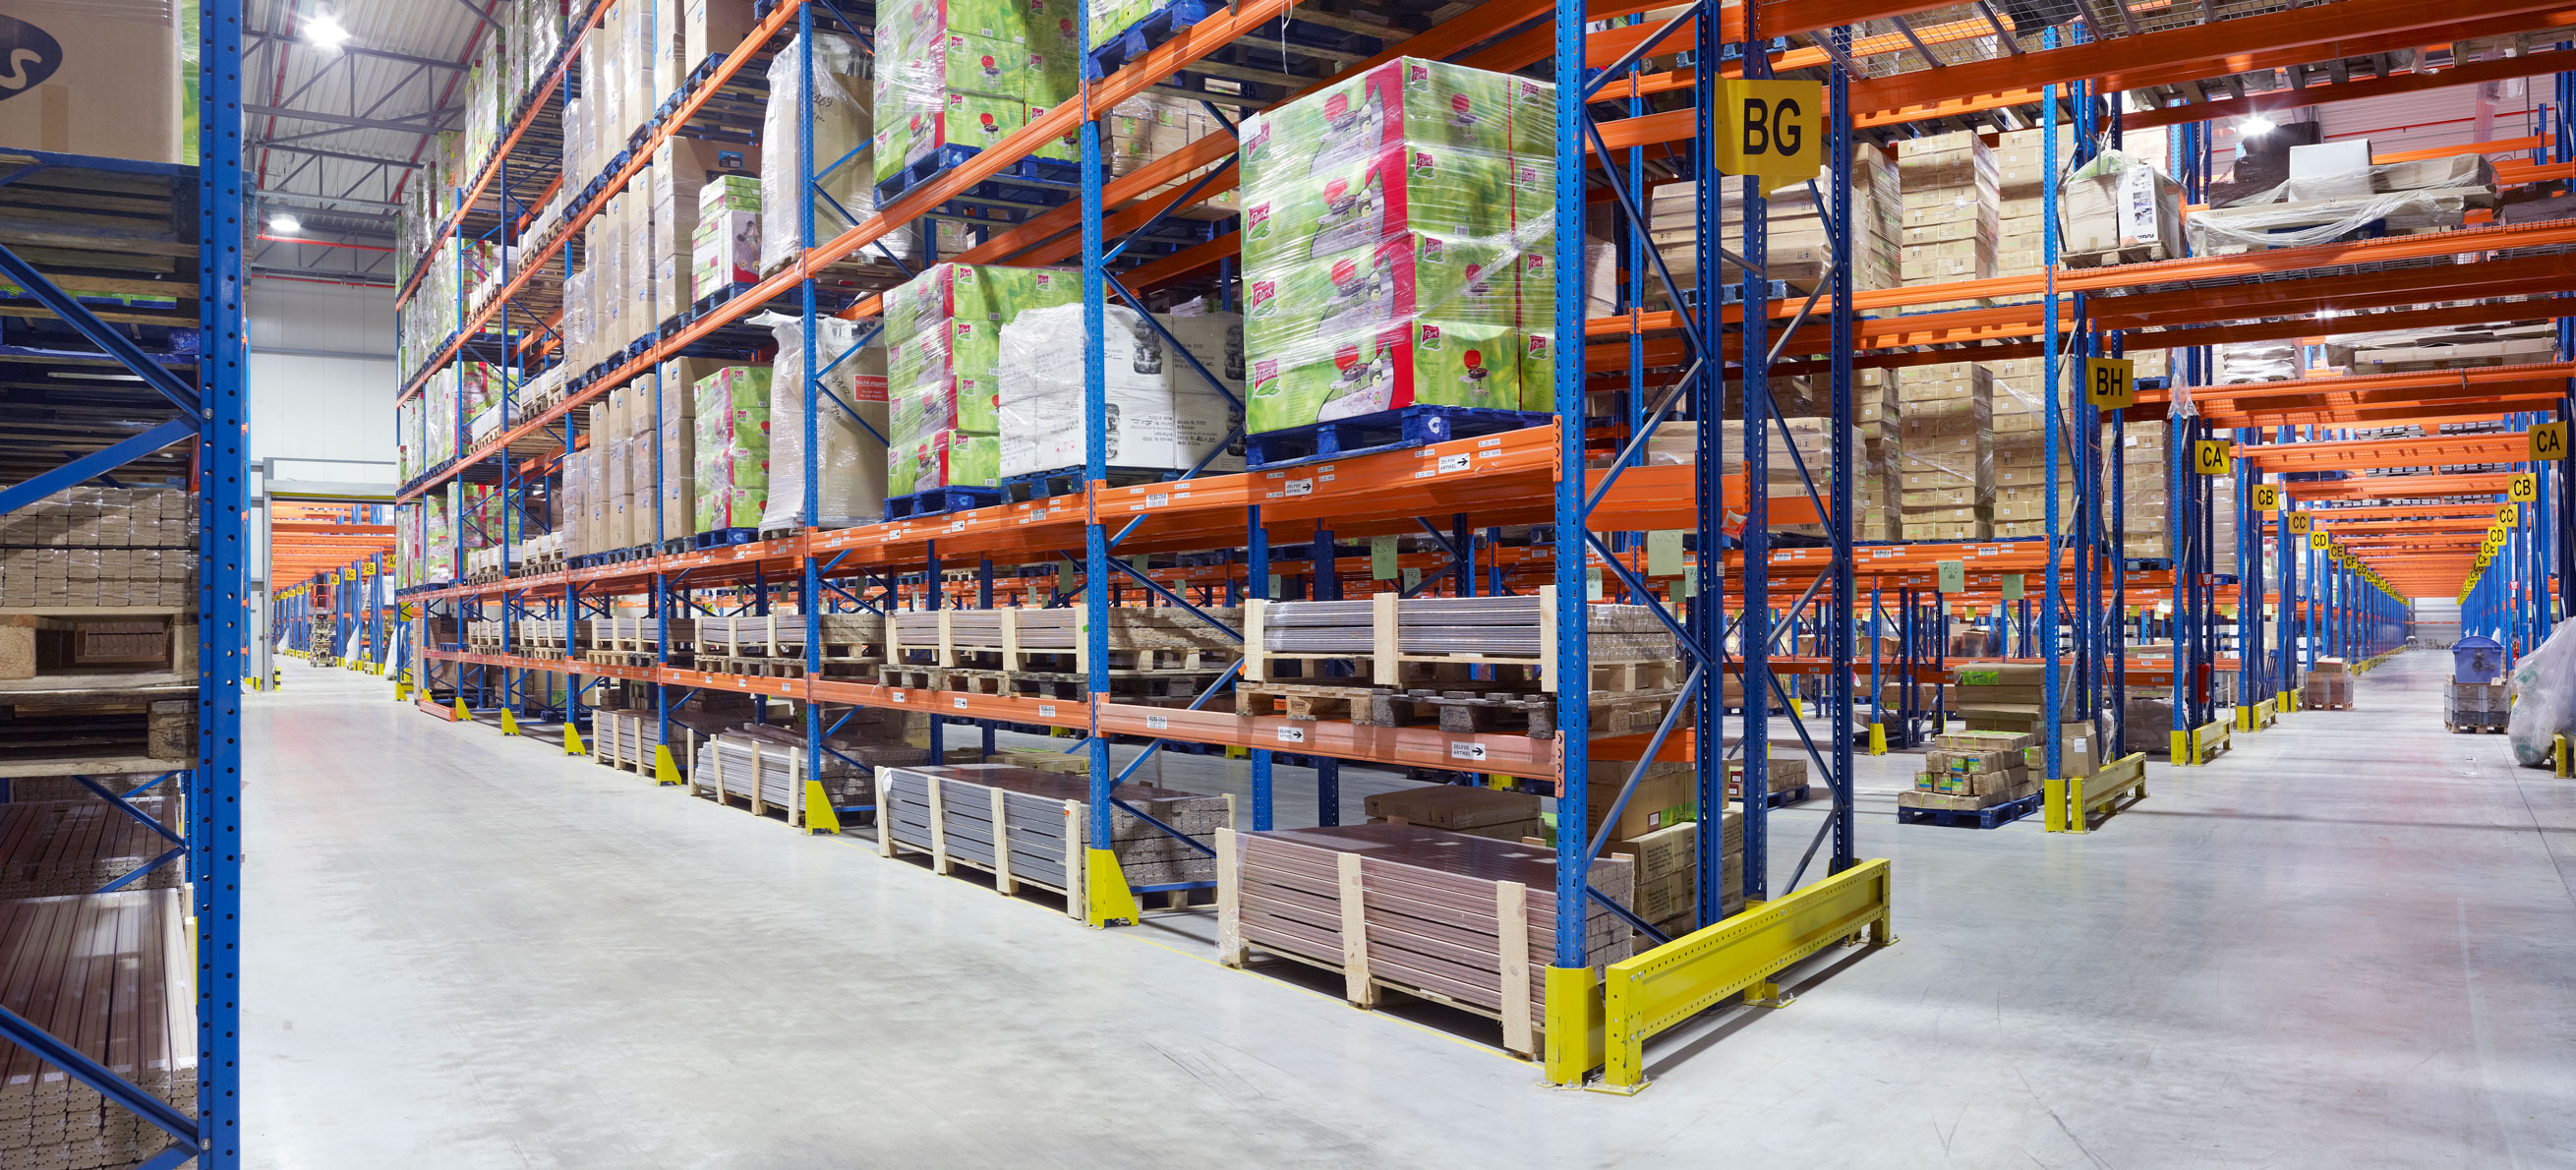 Wholesale warehouse storage